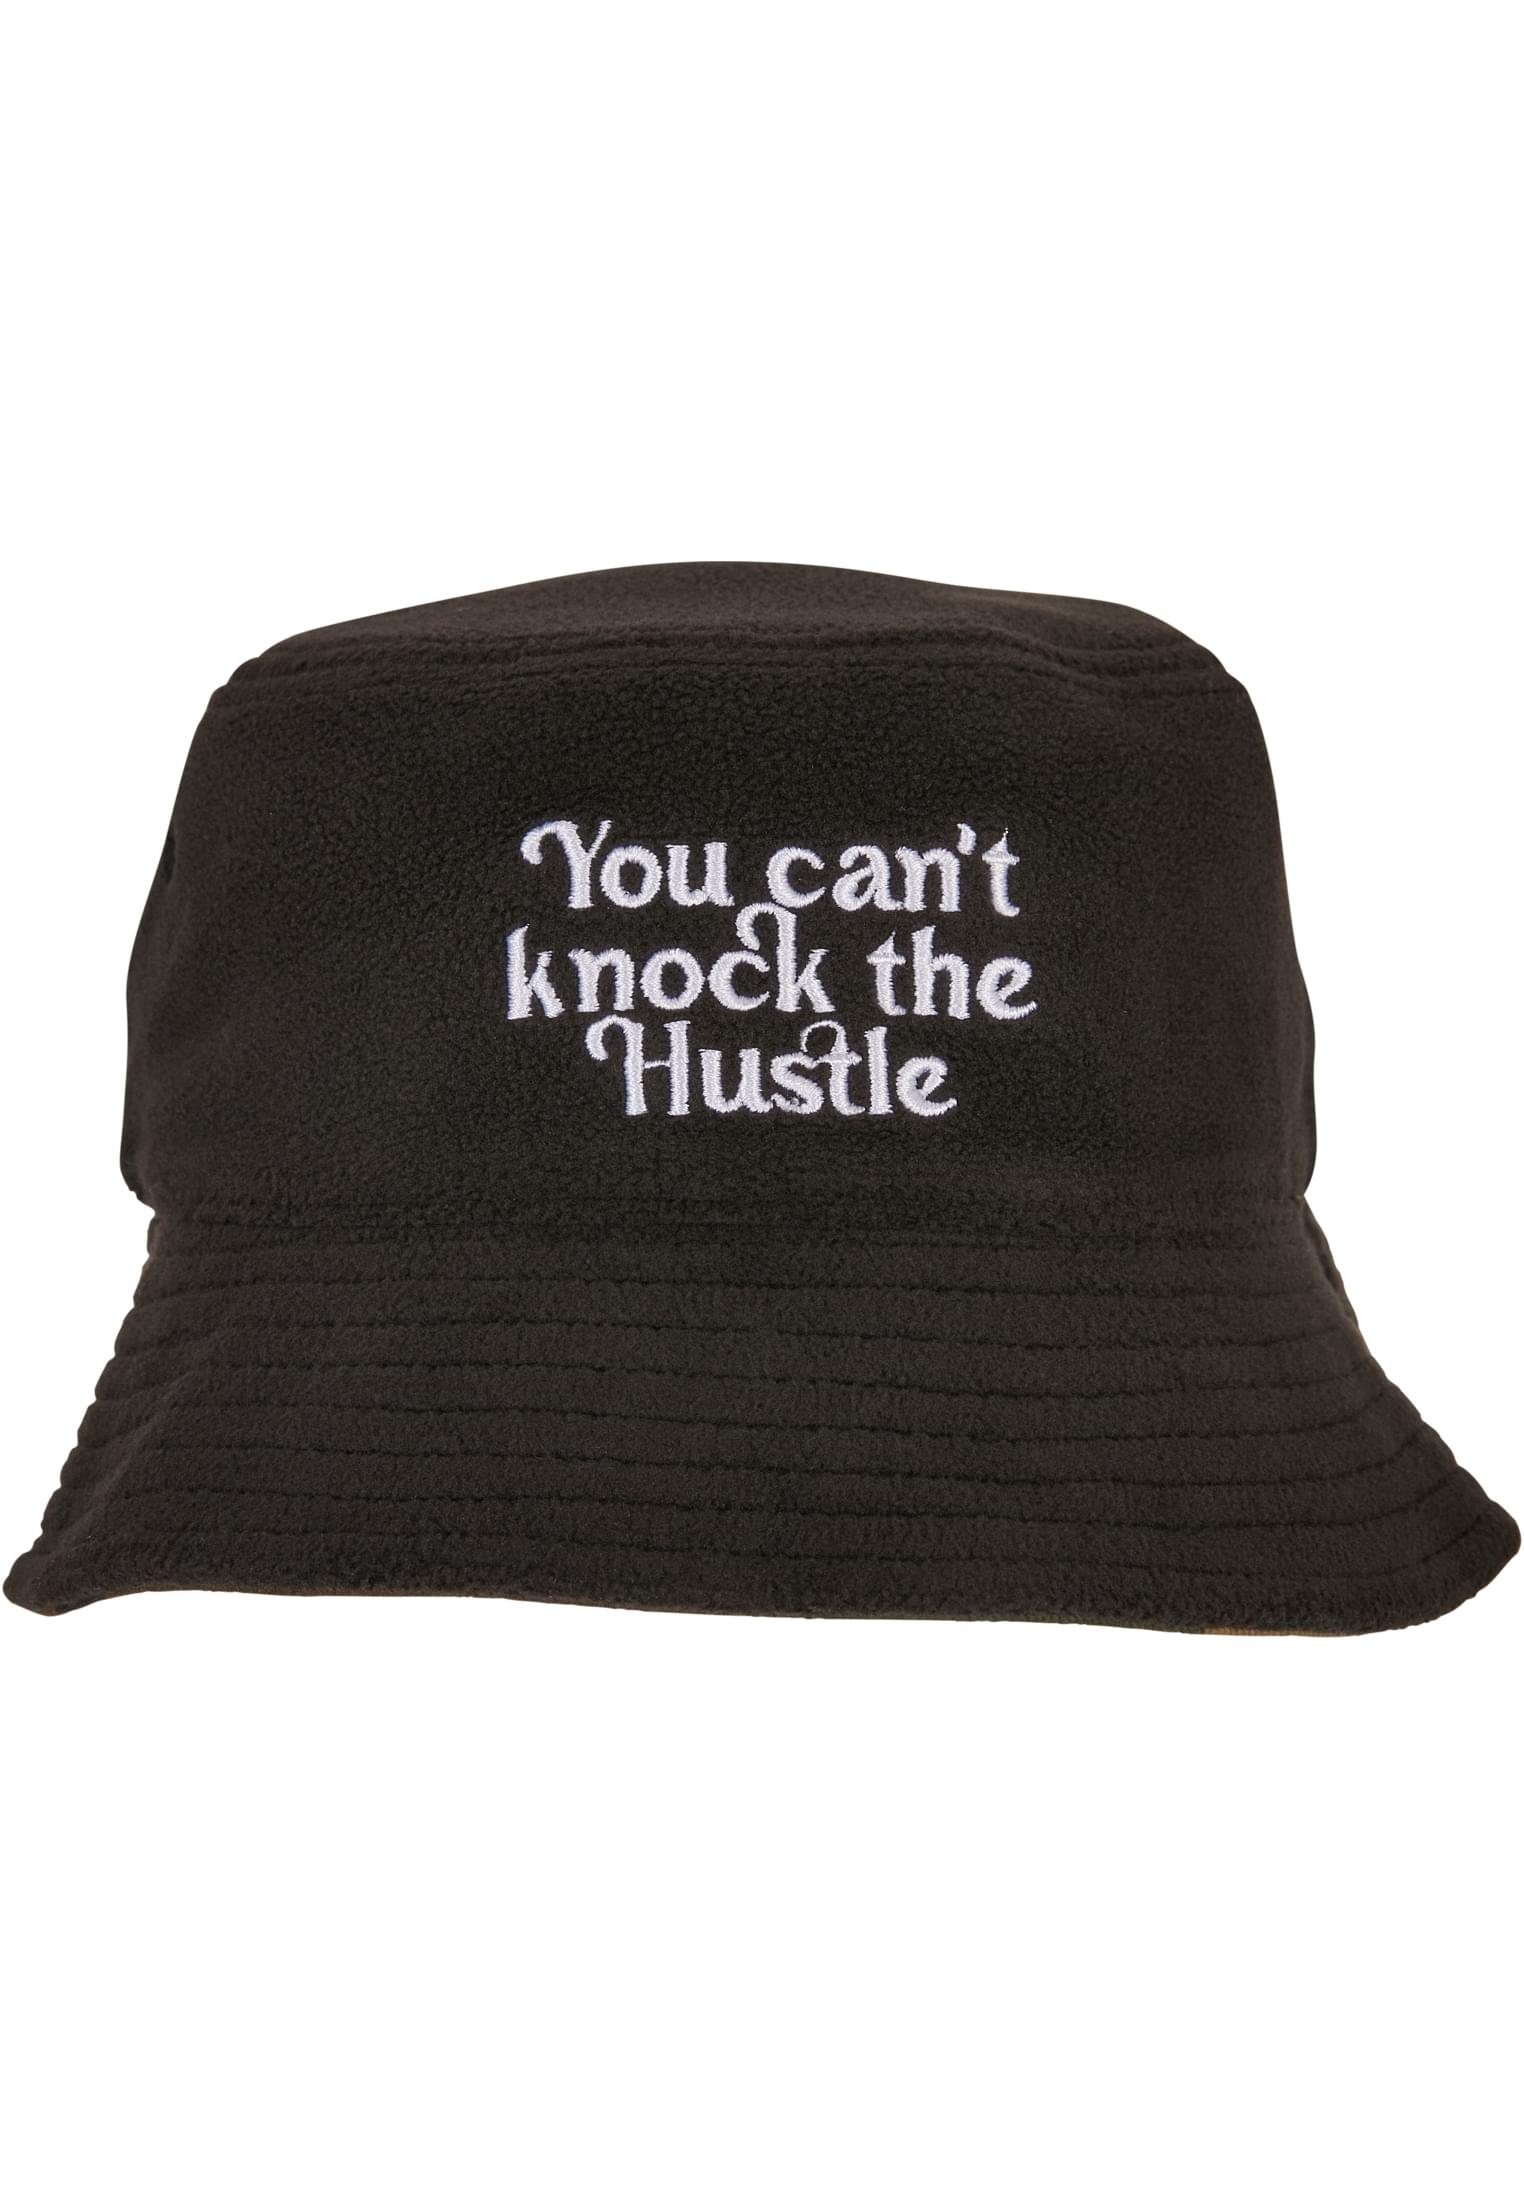 Accessoires & Knock the Flex CAYLER Hat Hustle SONS Bucket Cap